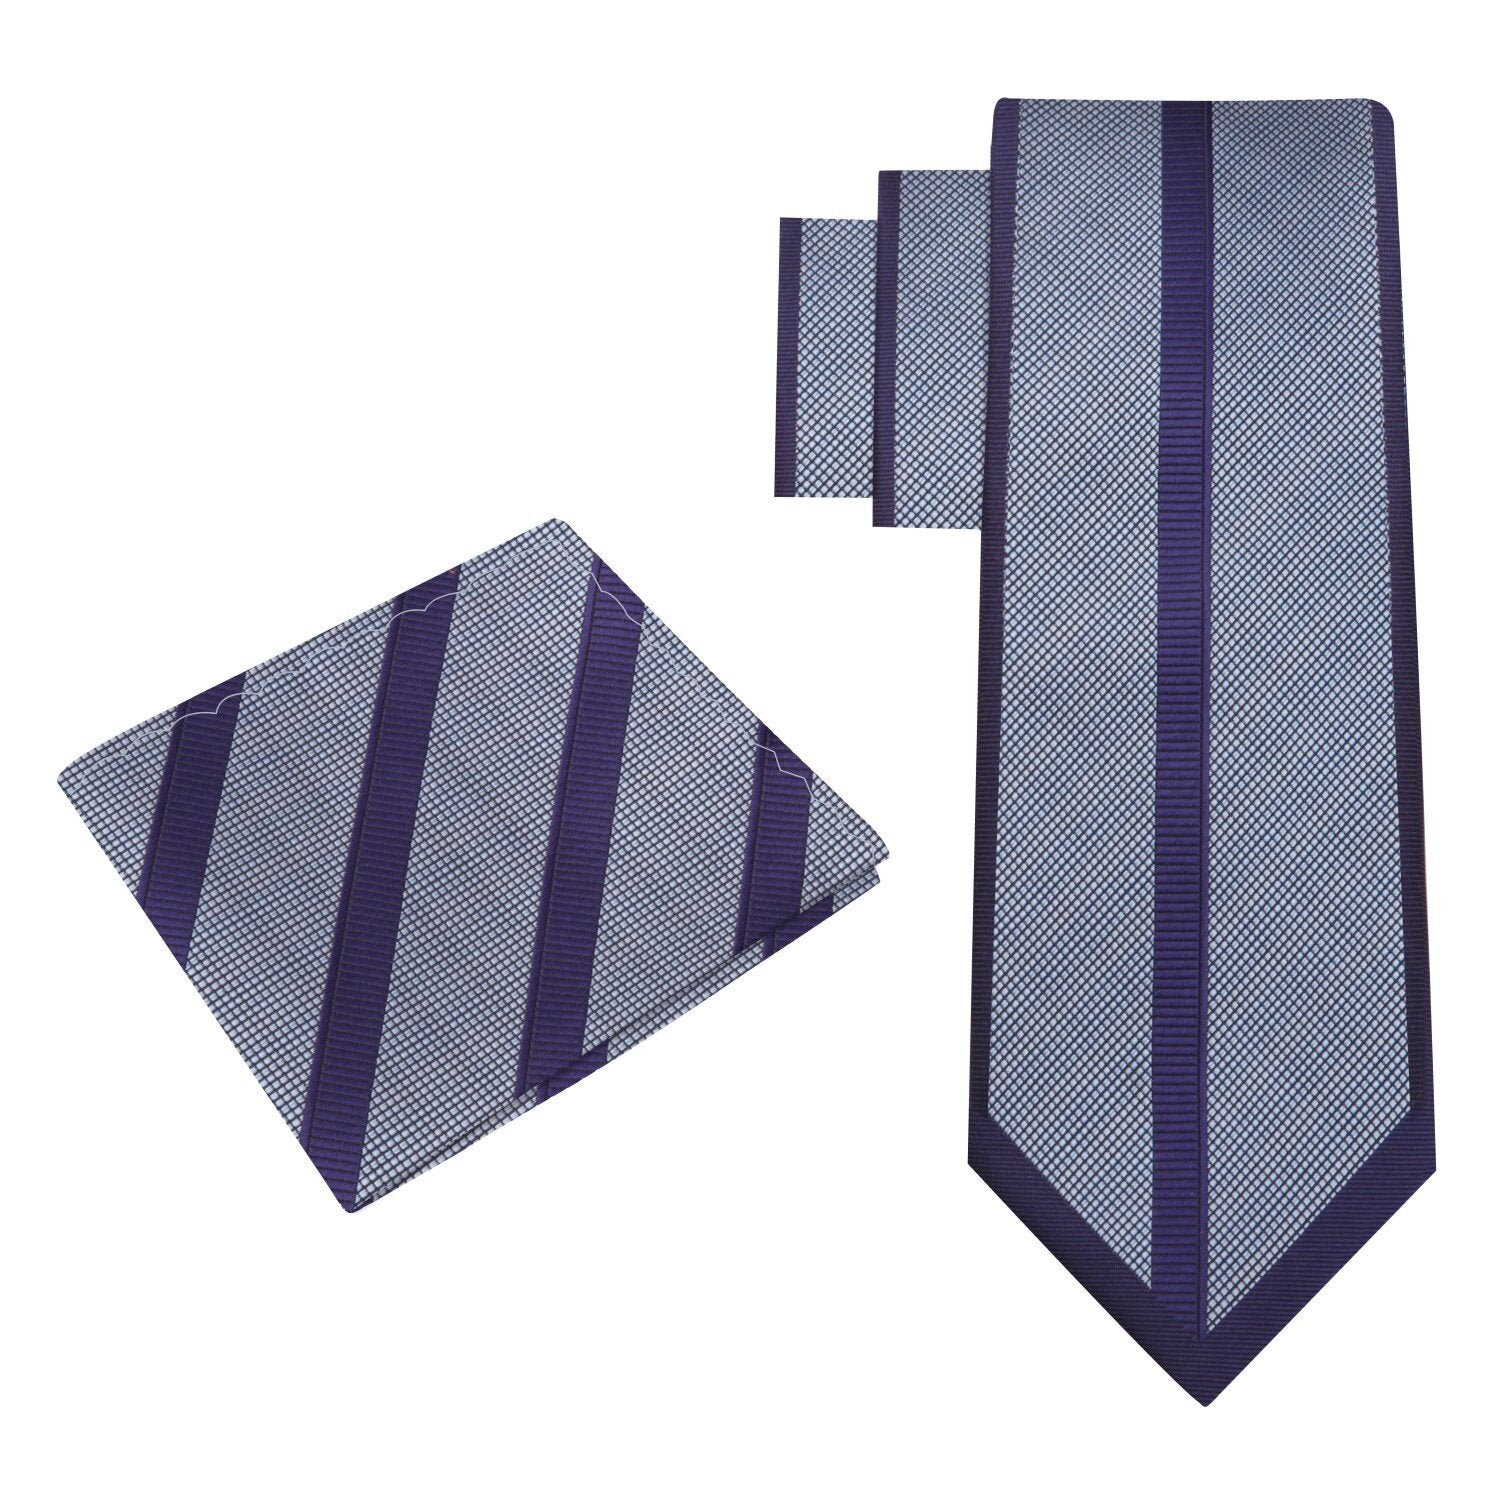 Alternate View: Grey, Purple Stripe Tie and Pocket Square